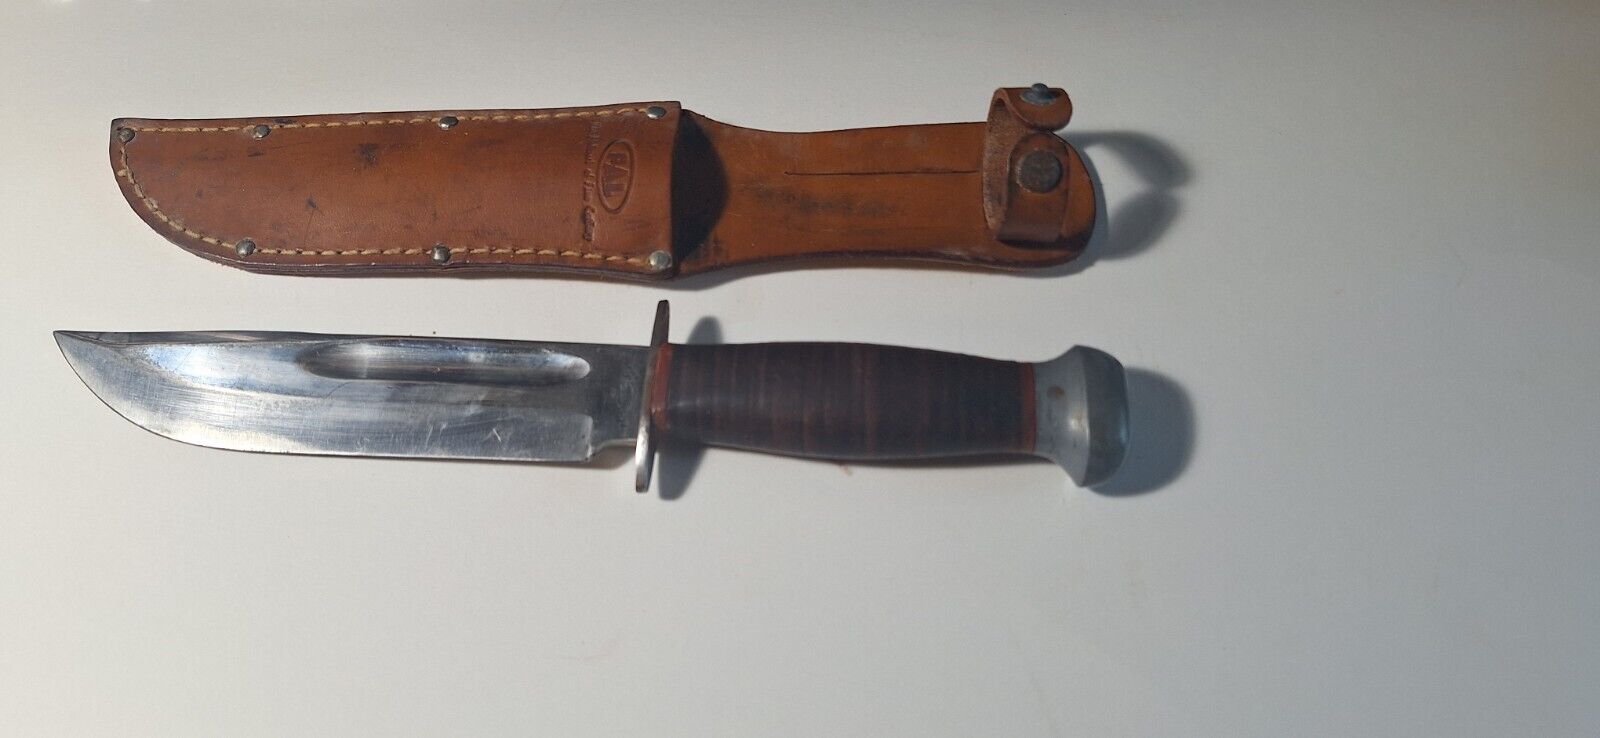 Vintage PAL RH-36 WWII Era Fixed Blade Combat Knife - w/ Marked Sheath - VGC